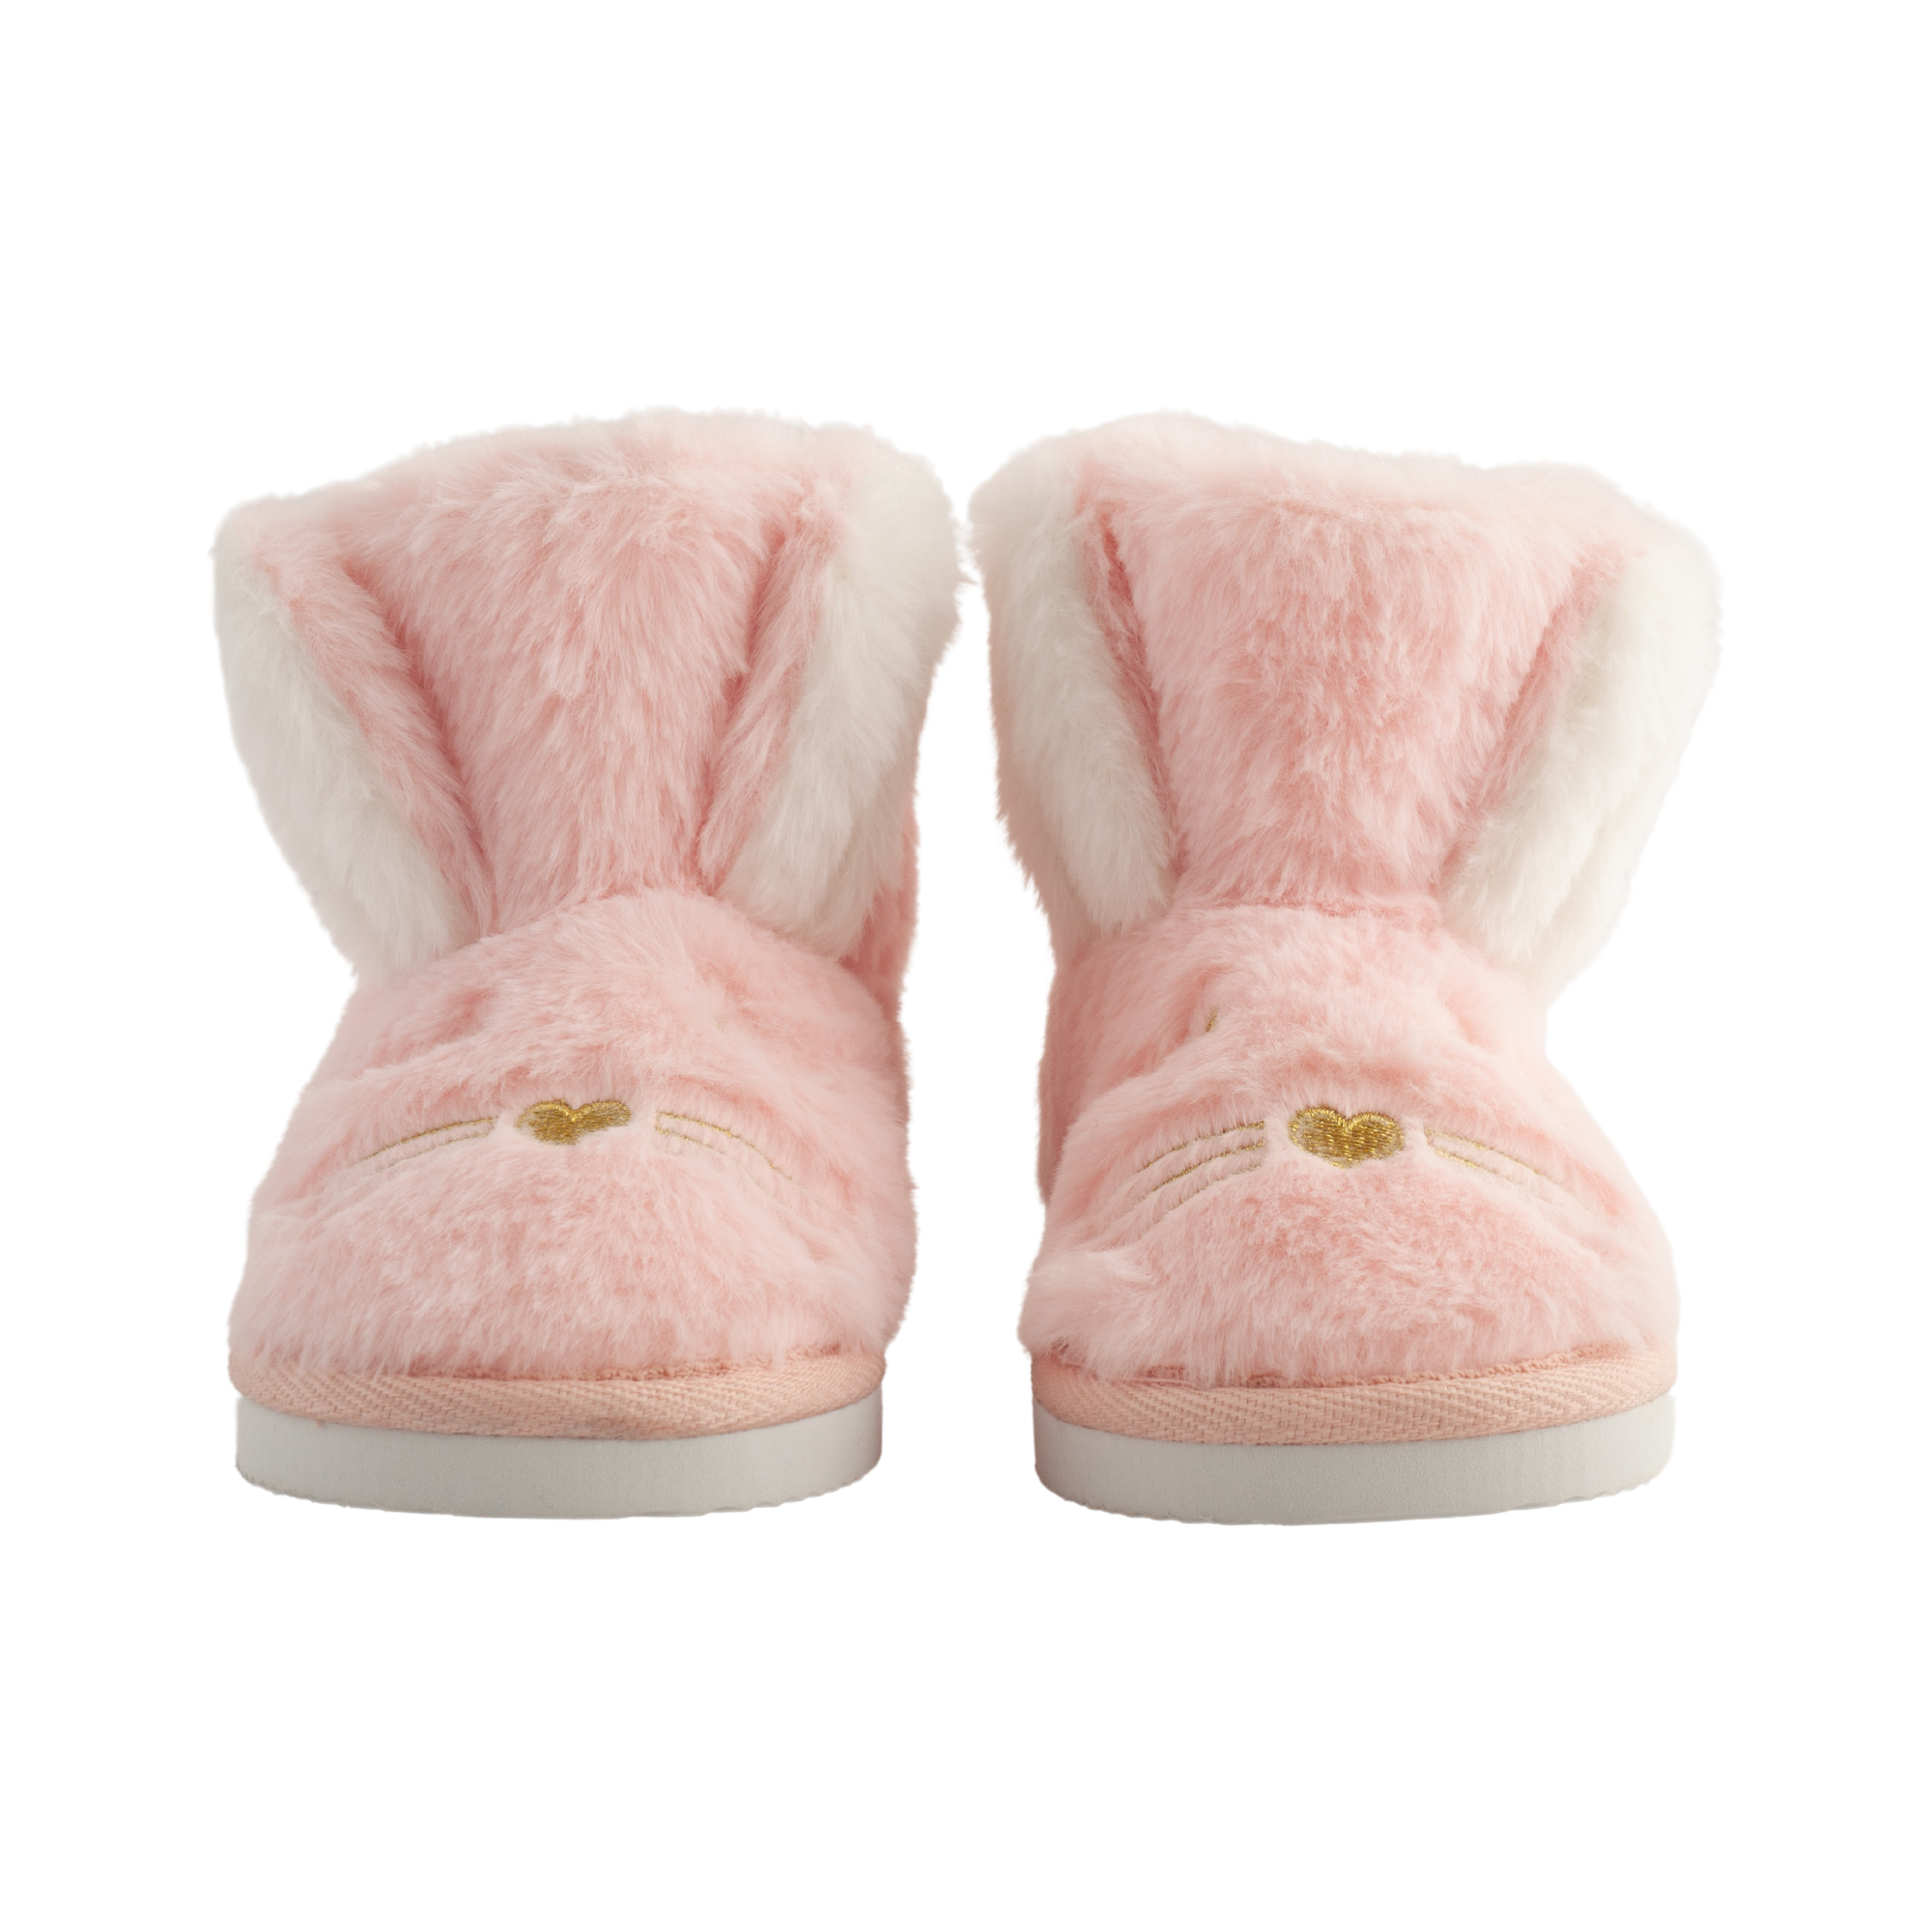 Novelty Slipper Boot - Pink Bunny Size 7-8